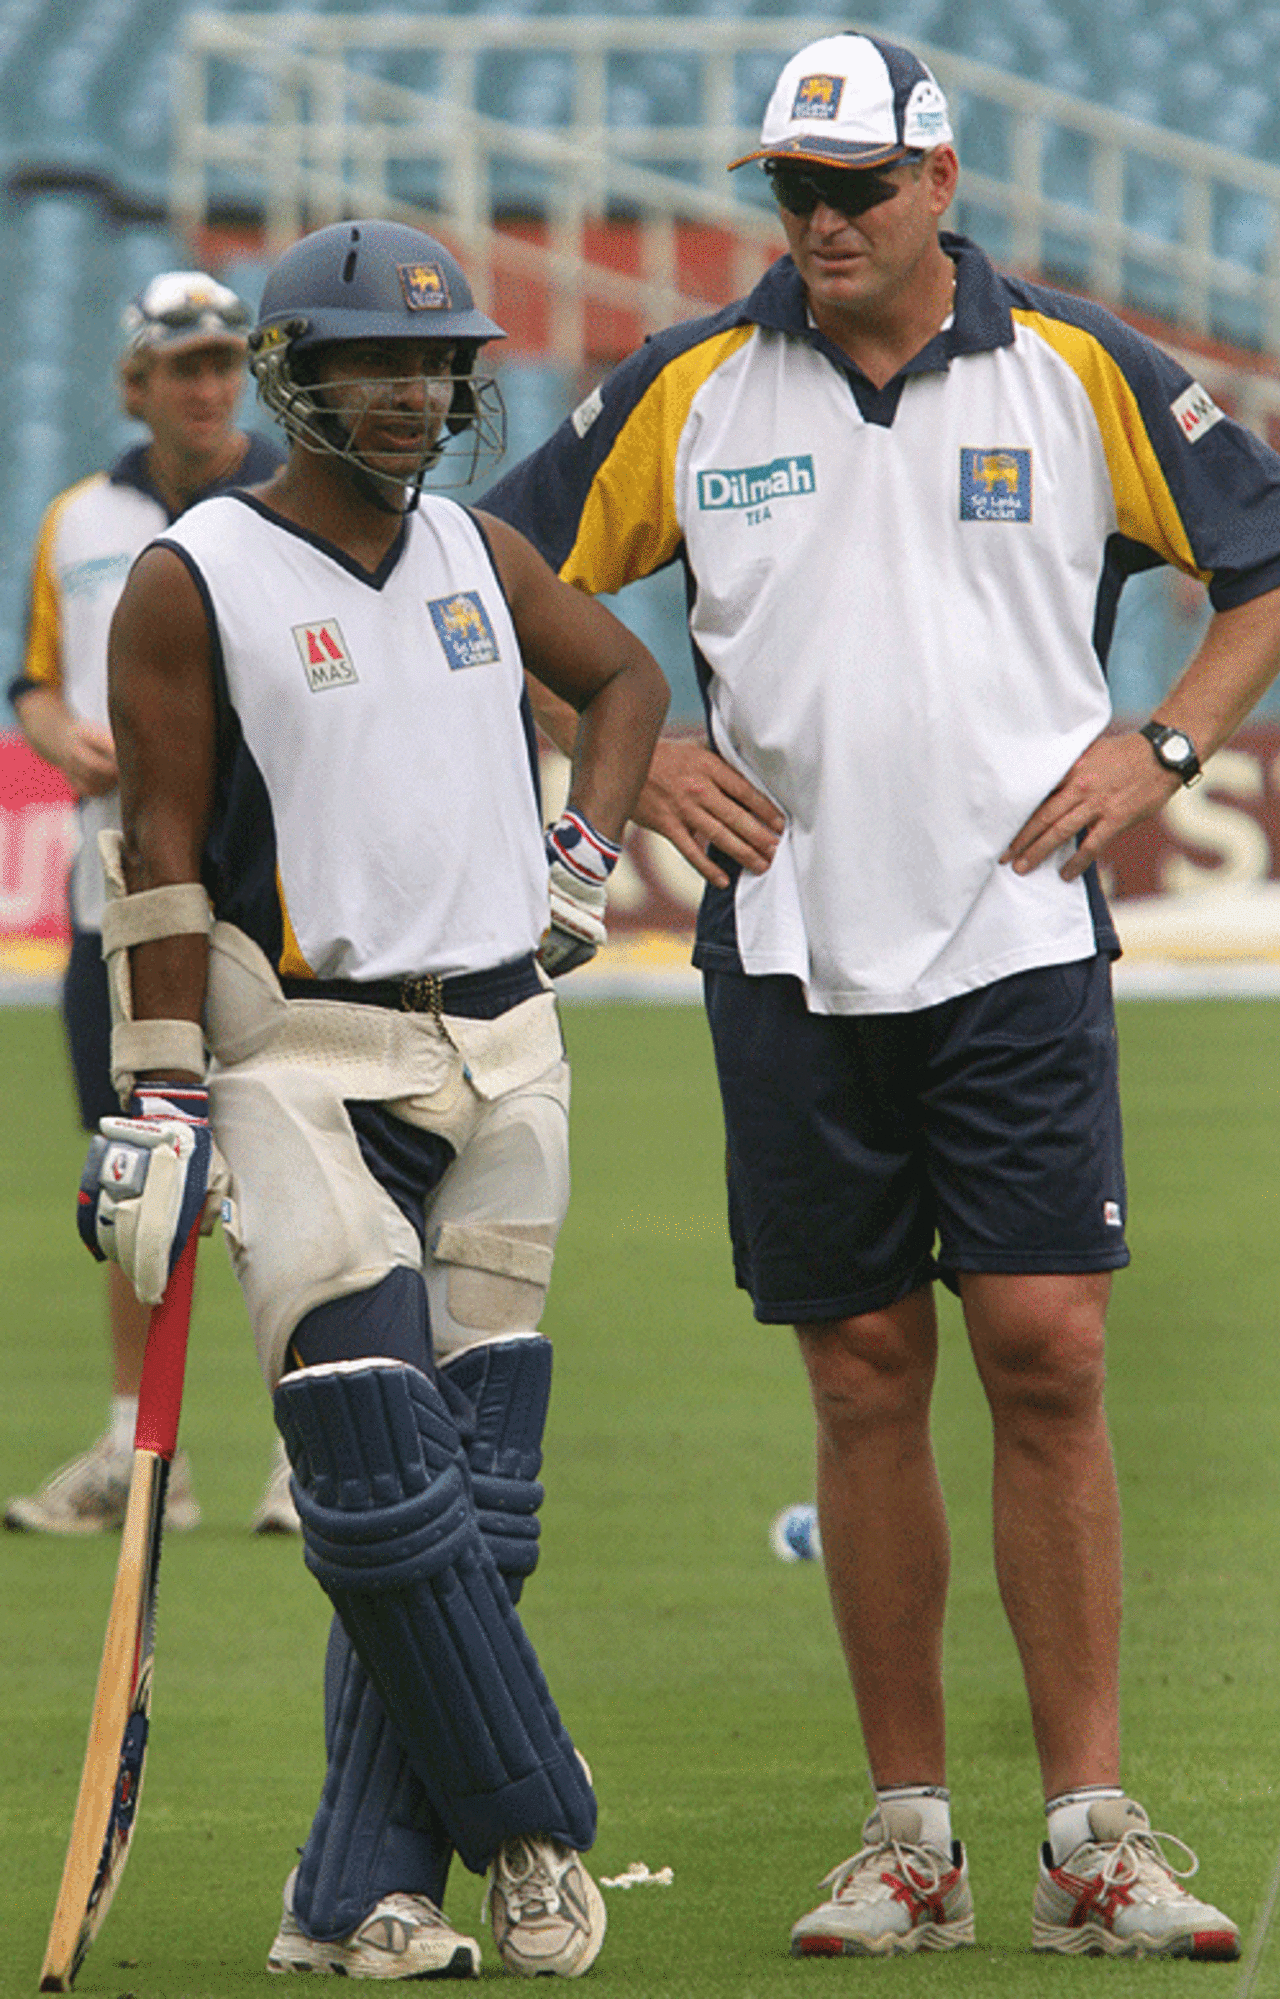 Kumar Sangakkara chats with Tom Moody ahead of his turn to bat, Eden Gardens, Kolkata, February 7, 2007